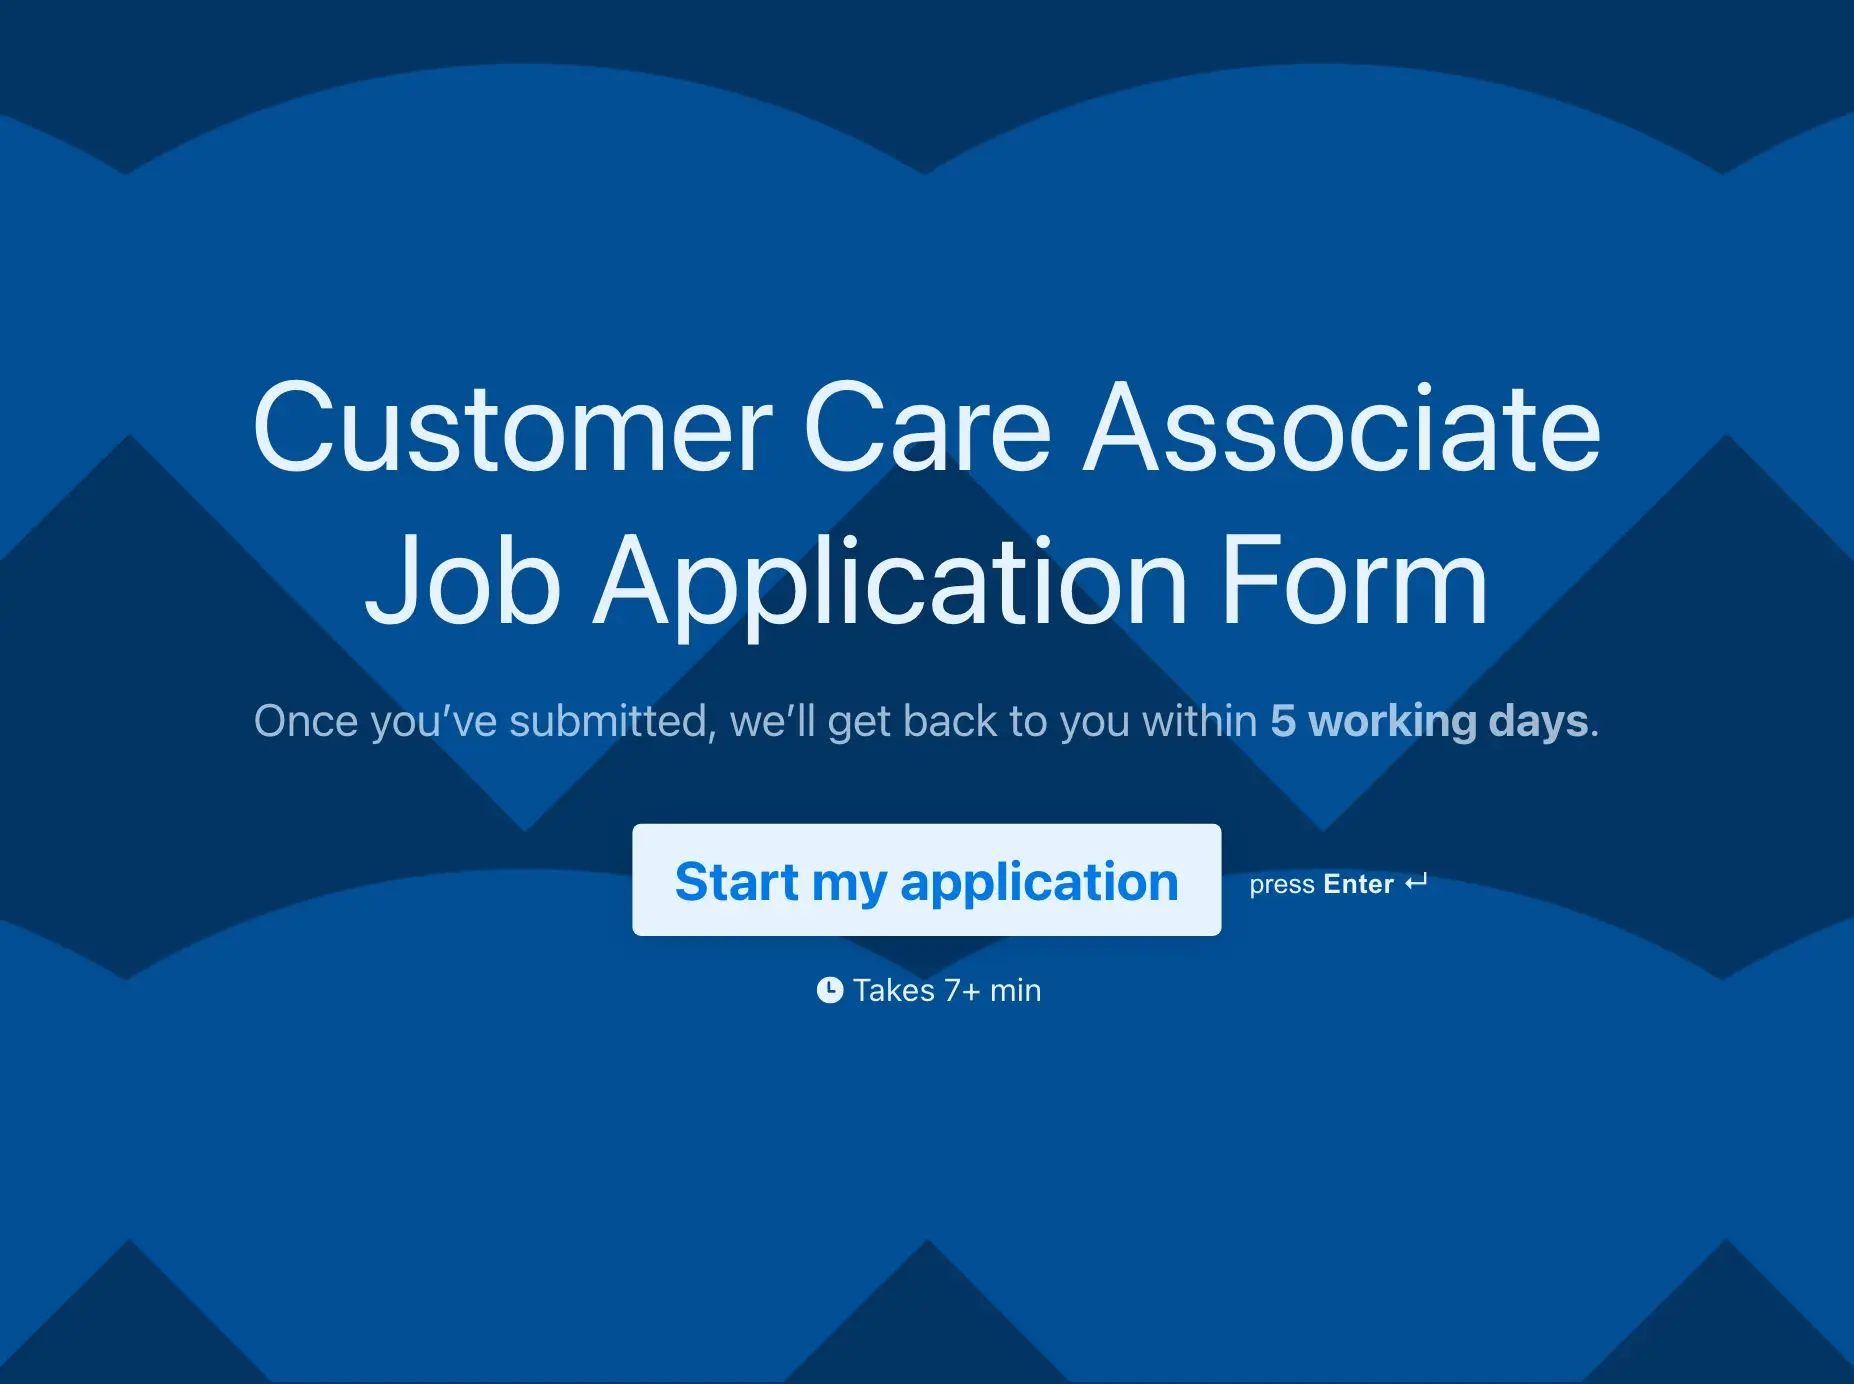 Customer Care Associate Job Application Form Template Hero